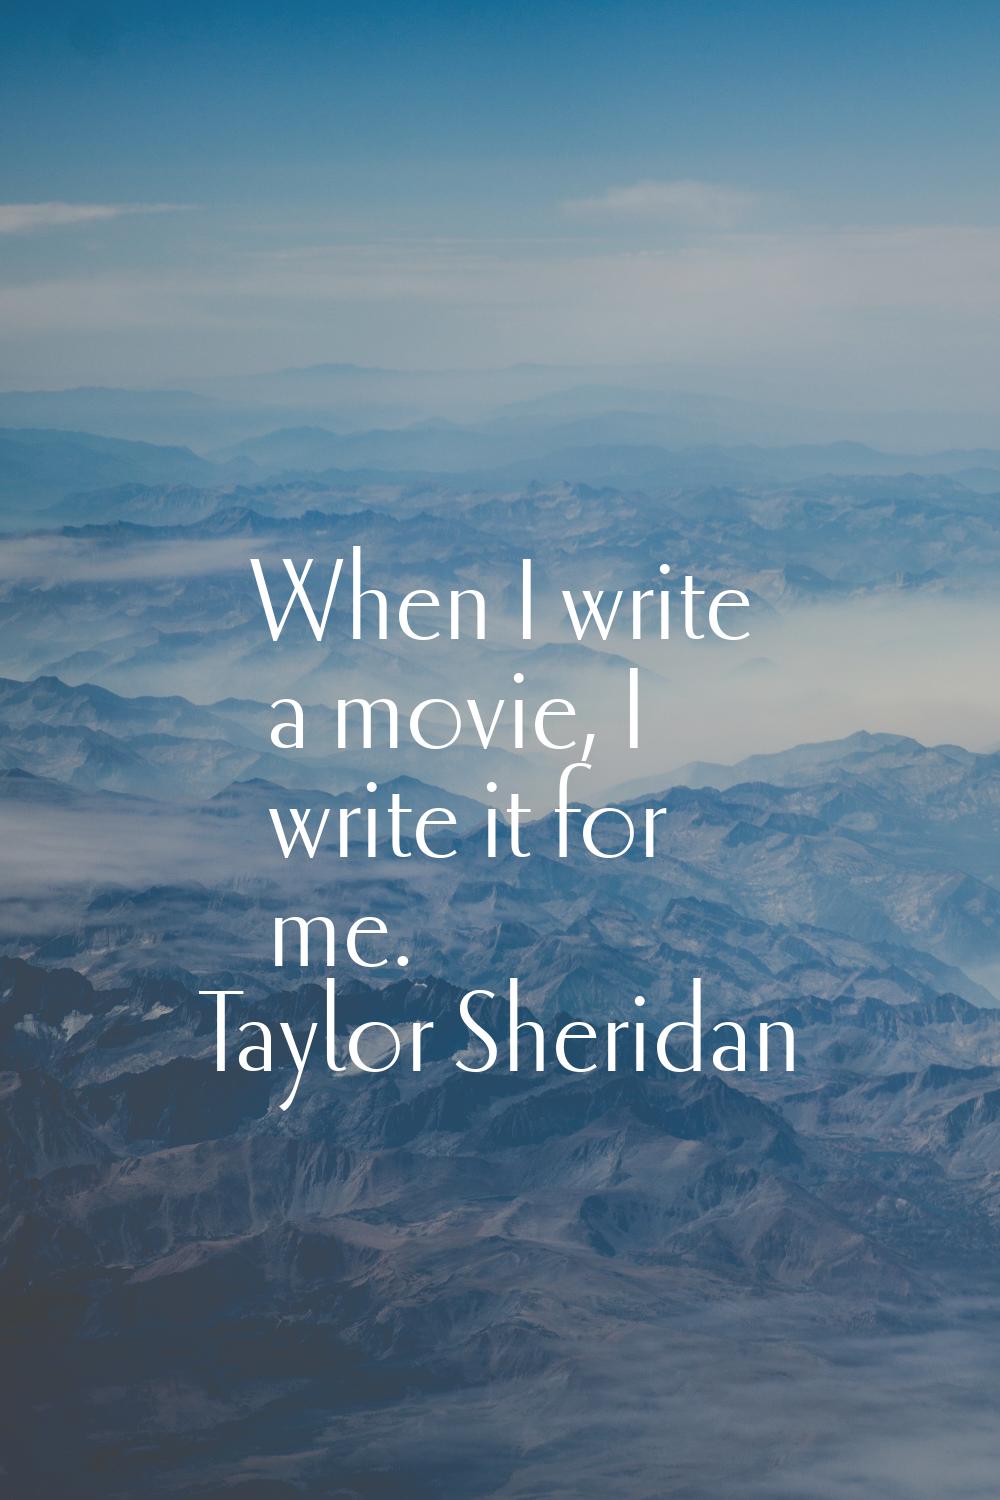 When I write a movie, I write it for me.